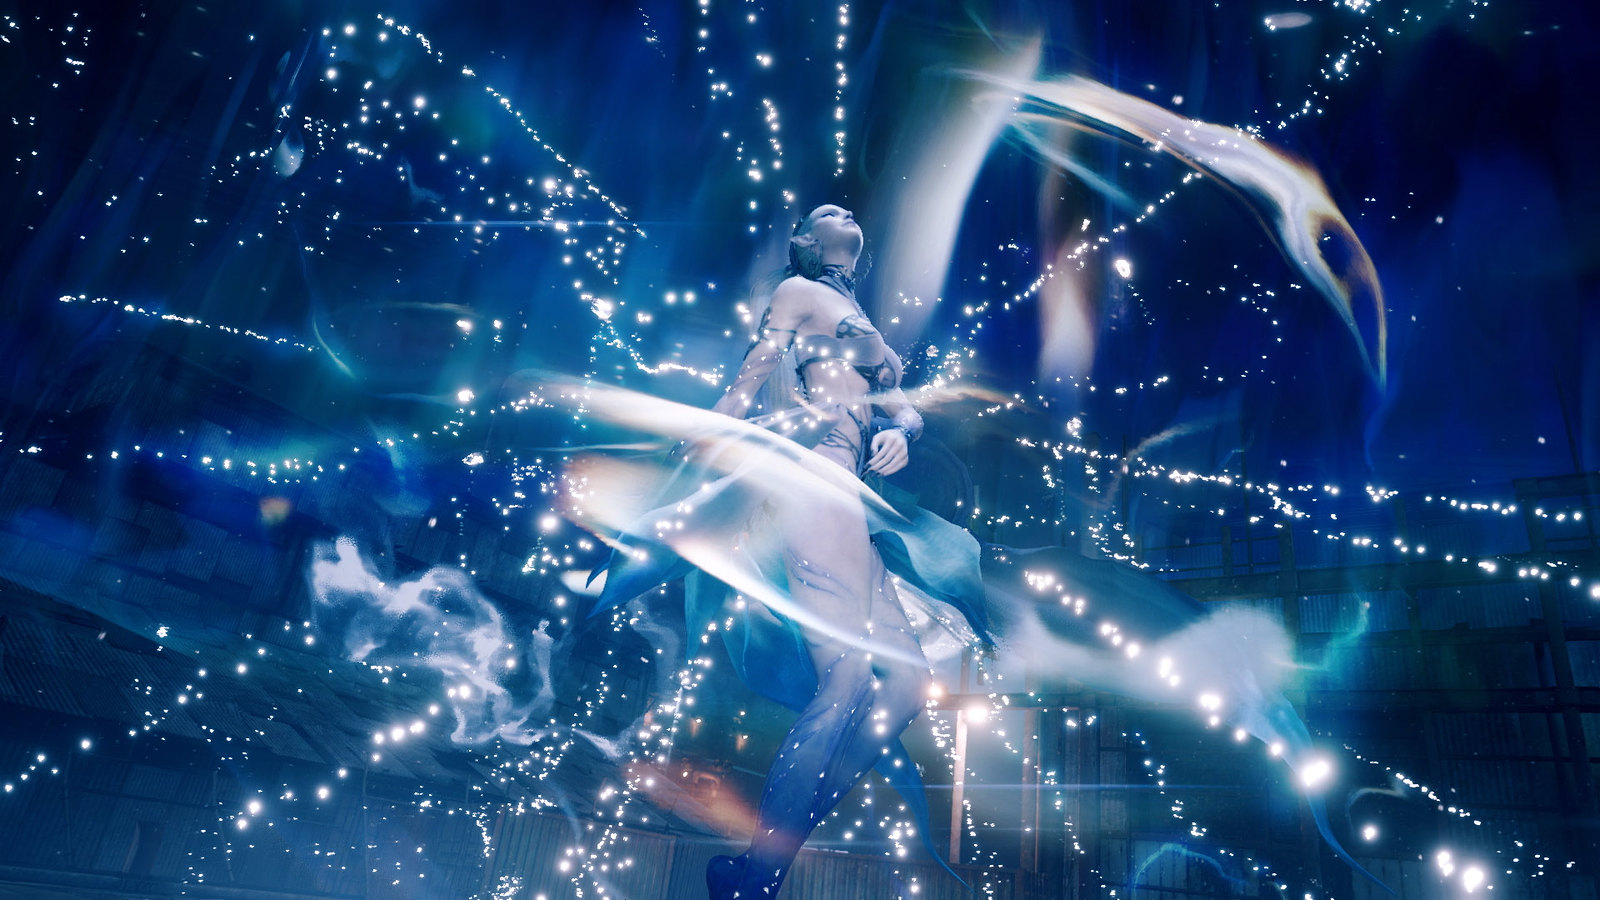 Final Fantasy VII Remake - Shiva - Diamond Dust